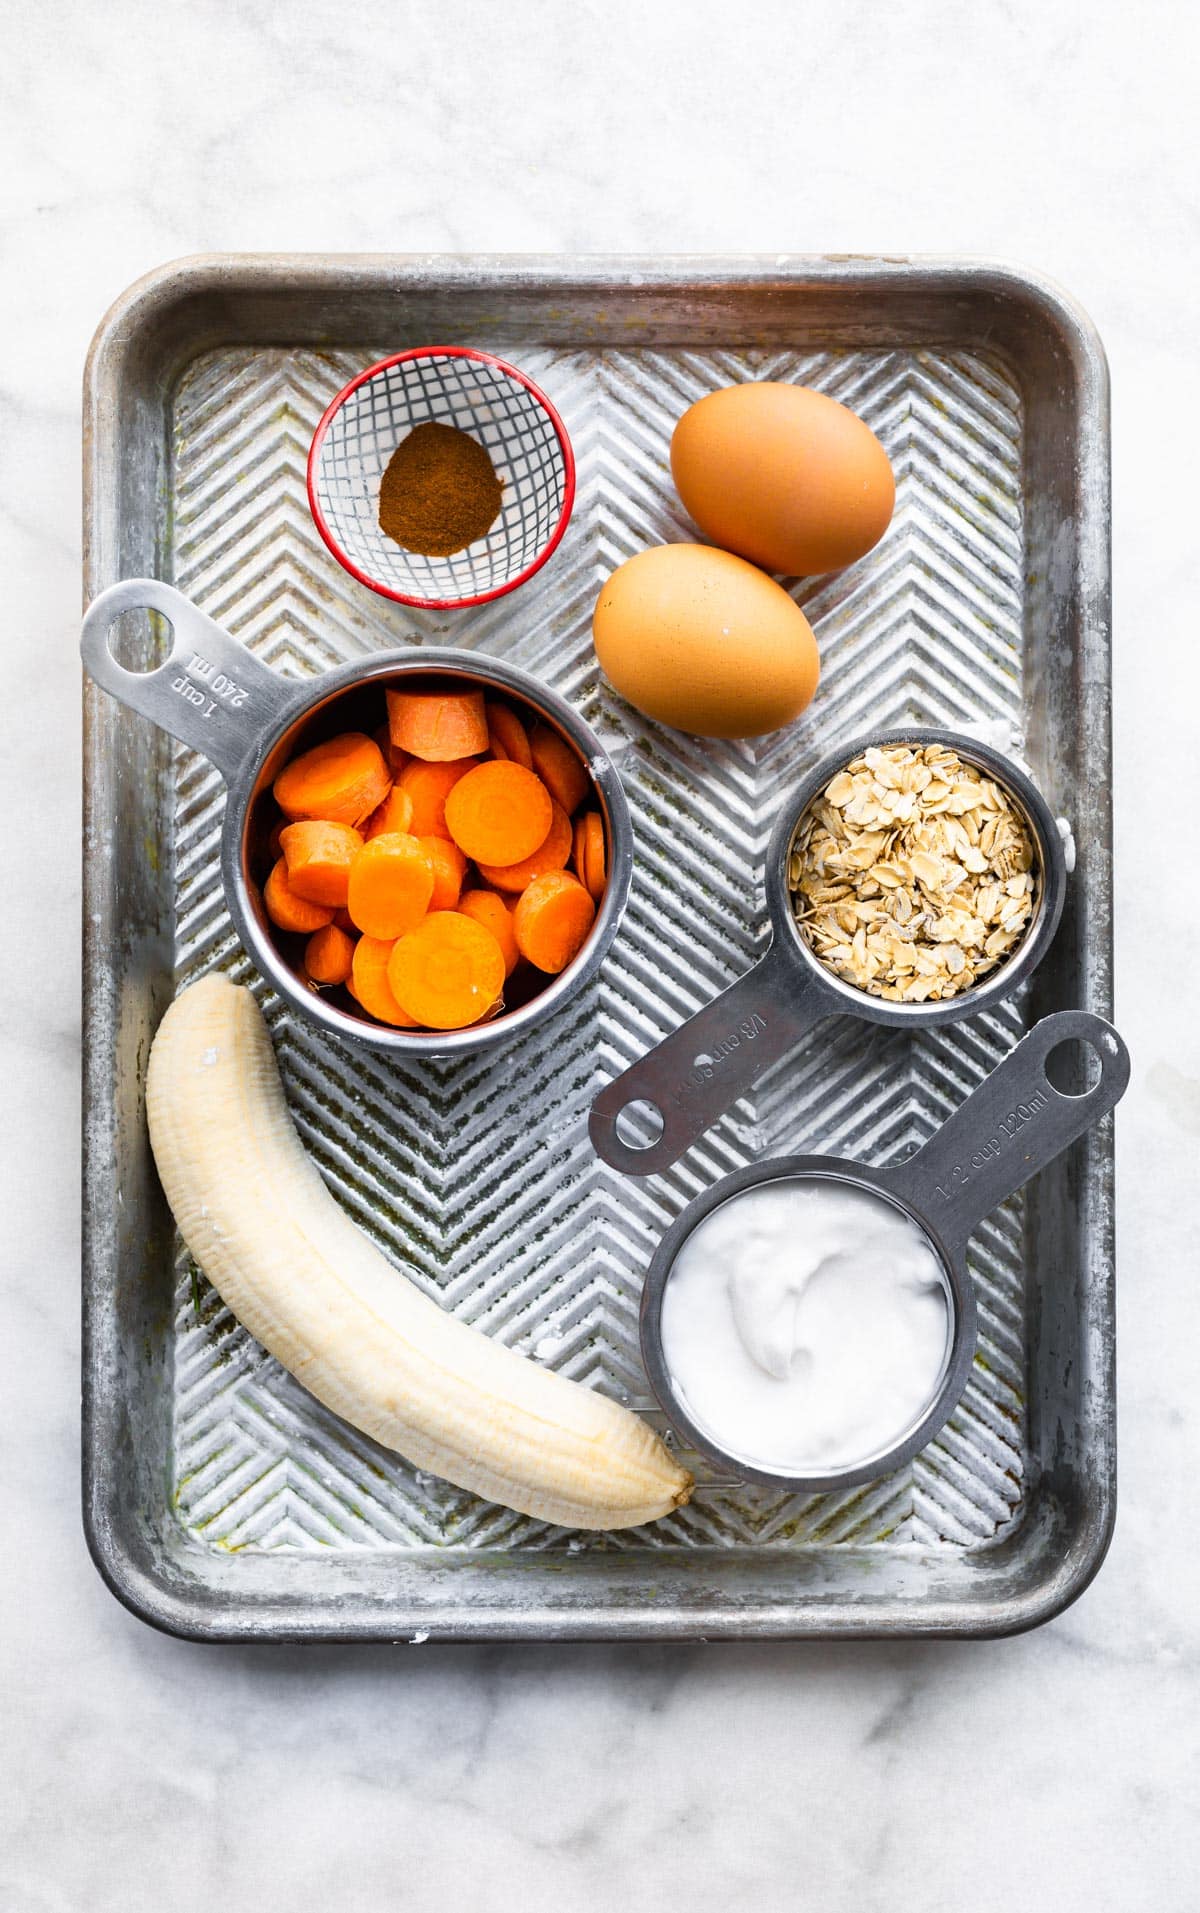 Assorted Gluten-Free Carrot Cake Pancakes ingredients - eggs, carrots, banana, oats, yogurt, and cinnamon.